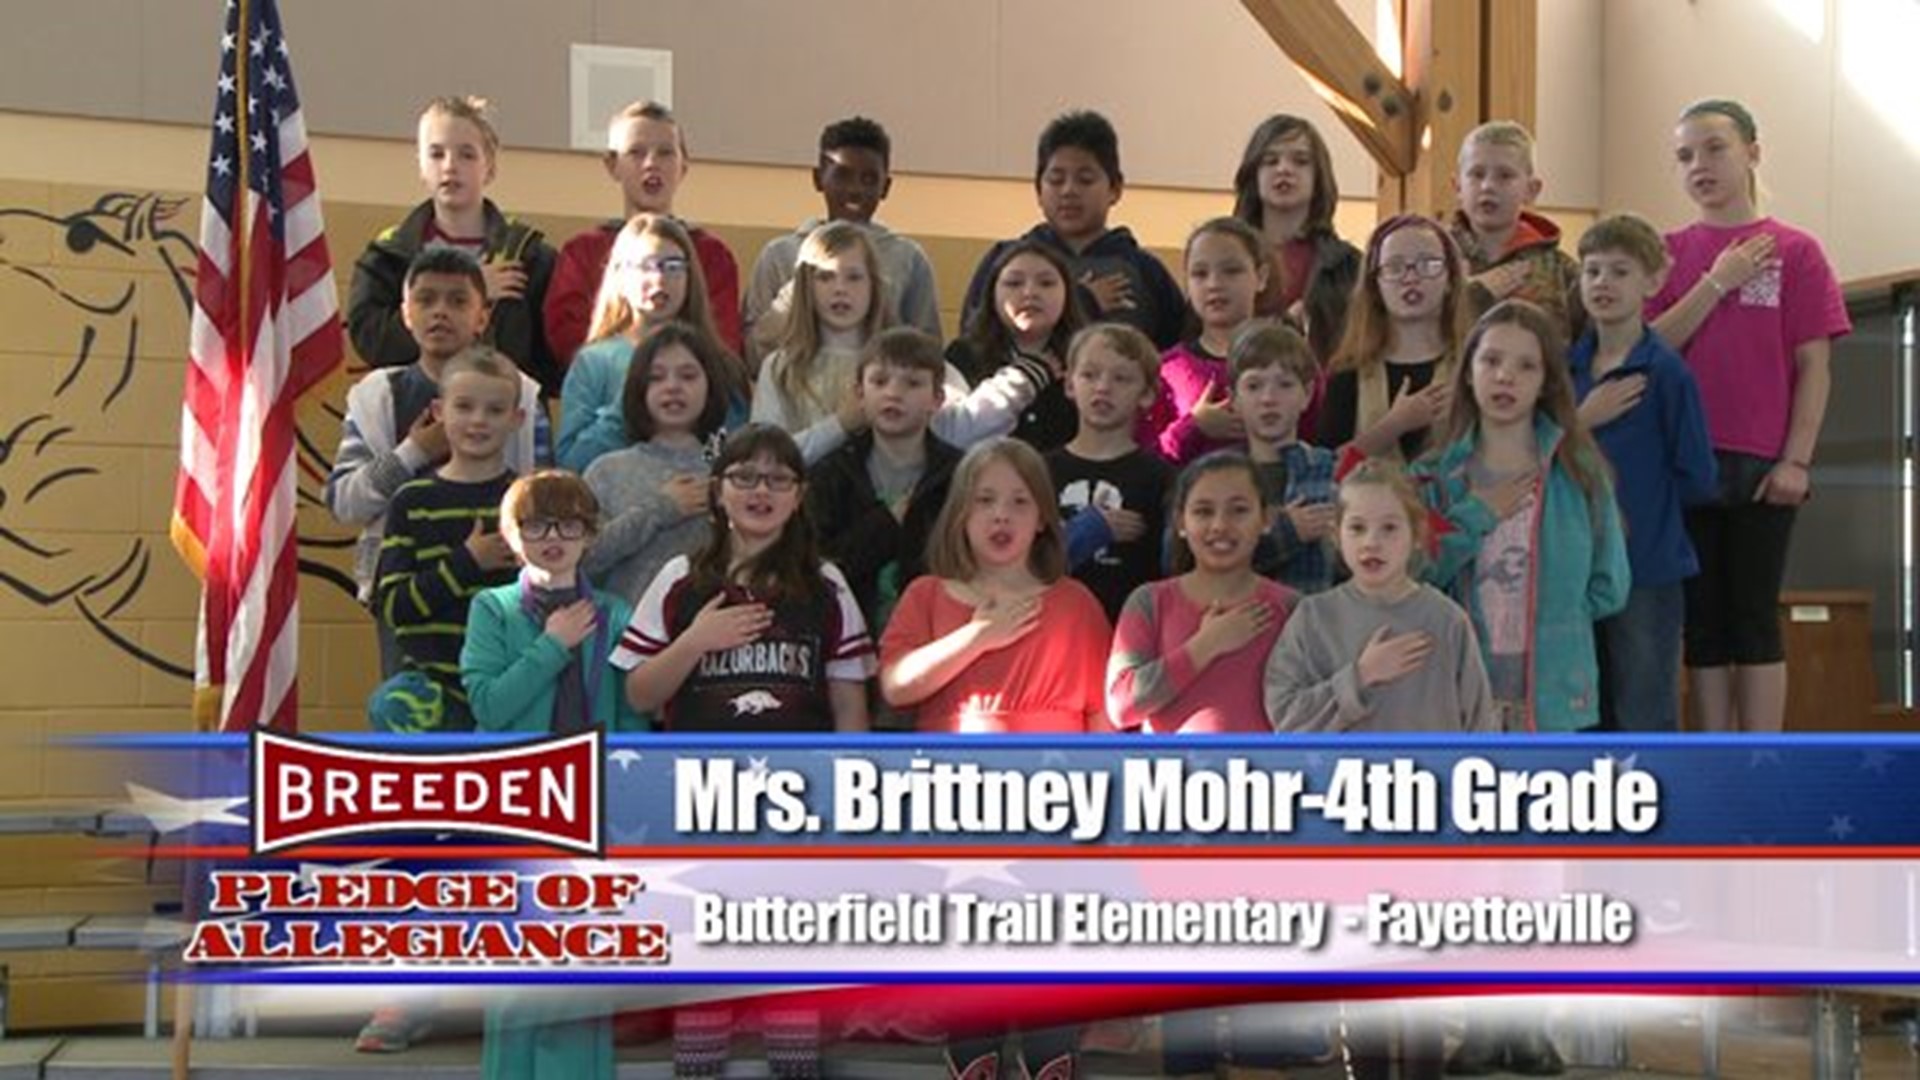 Butterfield Trail Elementary, Fayetteville - Mrs. Brittney Mohr - 4th Grade